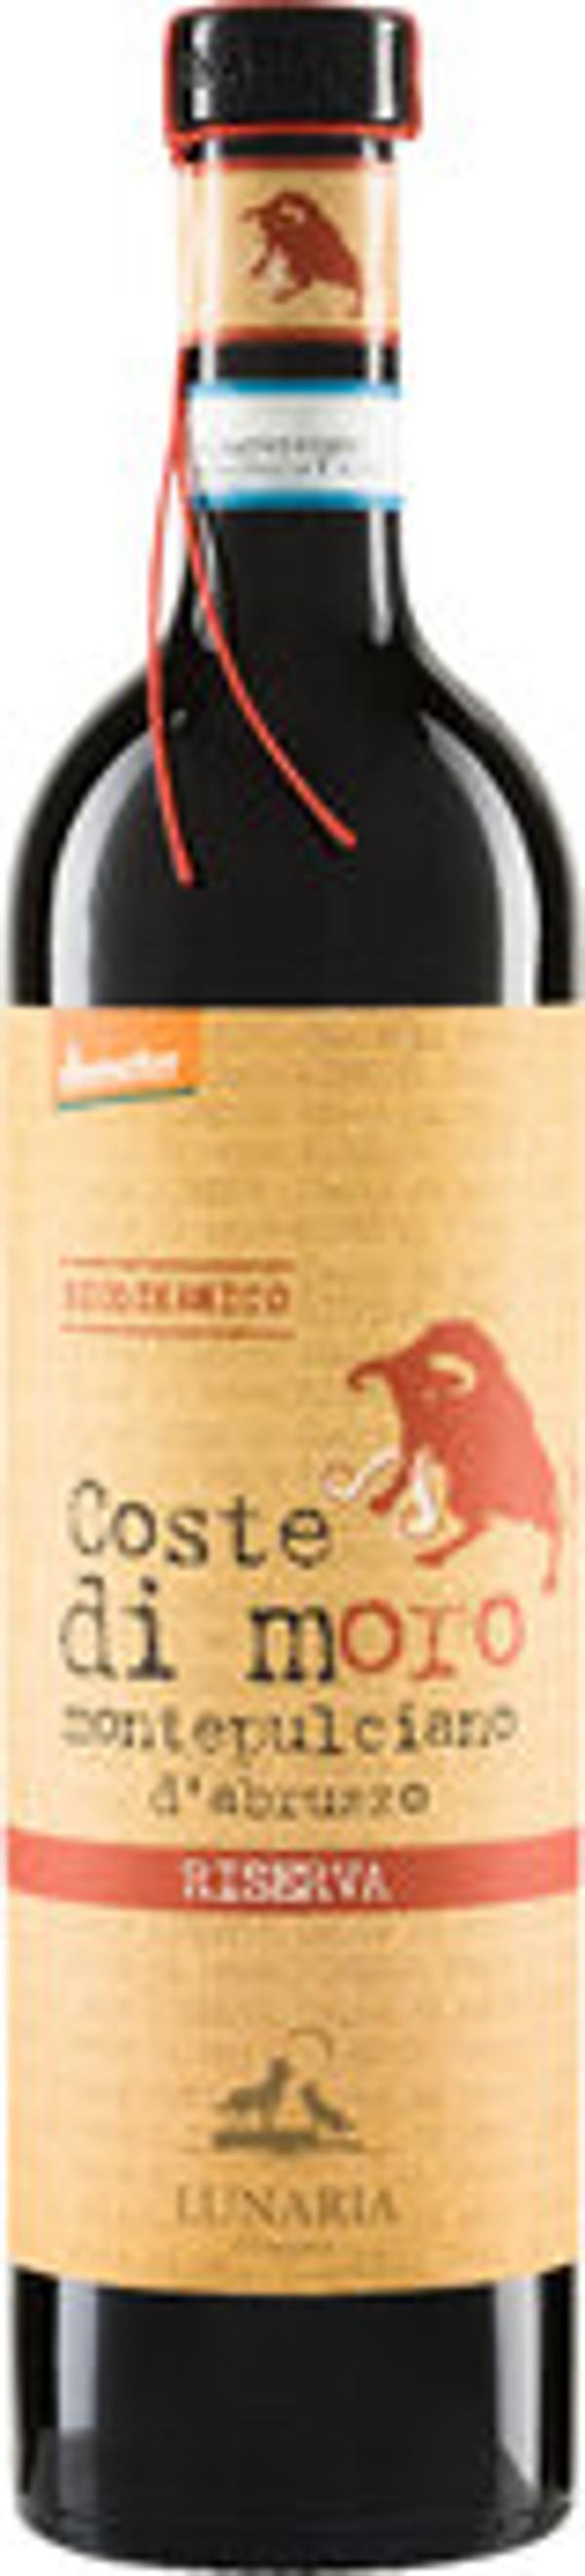 Produktfoto zu Coste di Moro Riserva rot